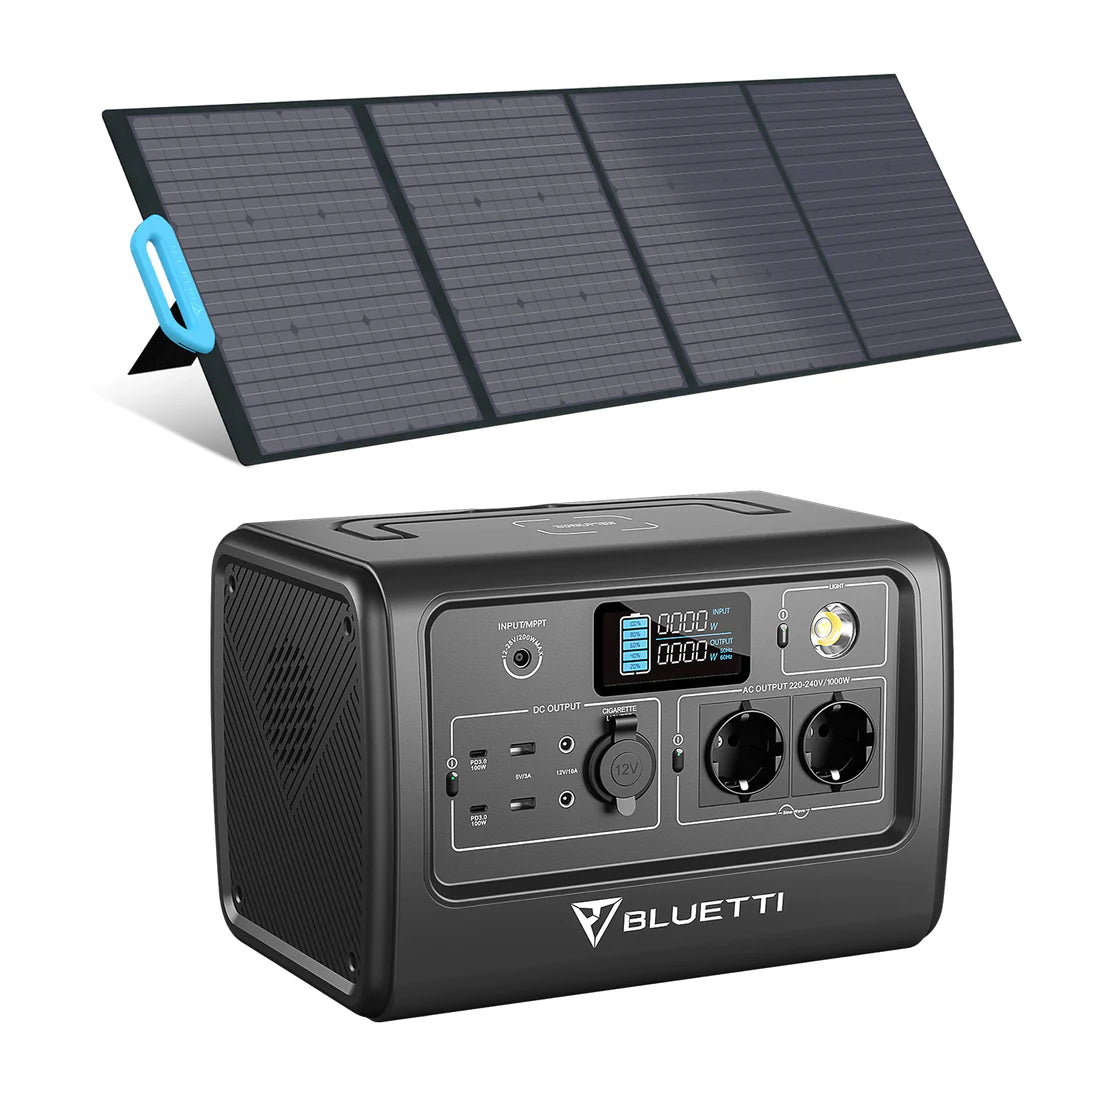 Off-grid kit: Bluetti EB70 solar generator + PV200 foldable solar panel